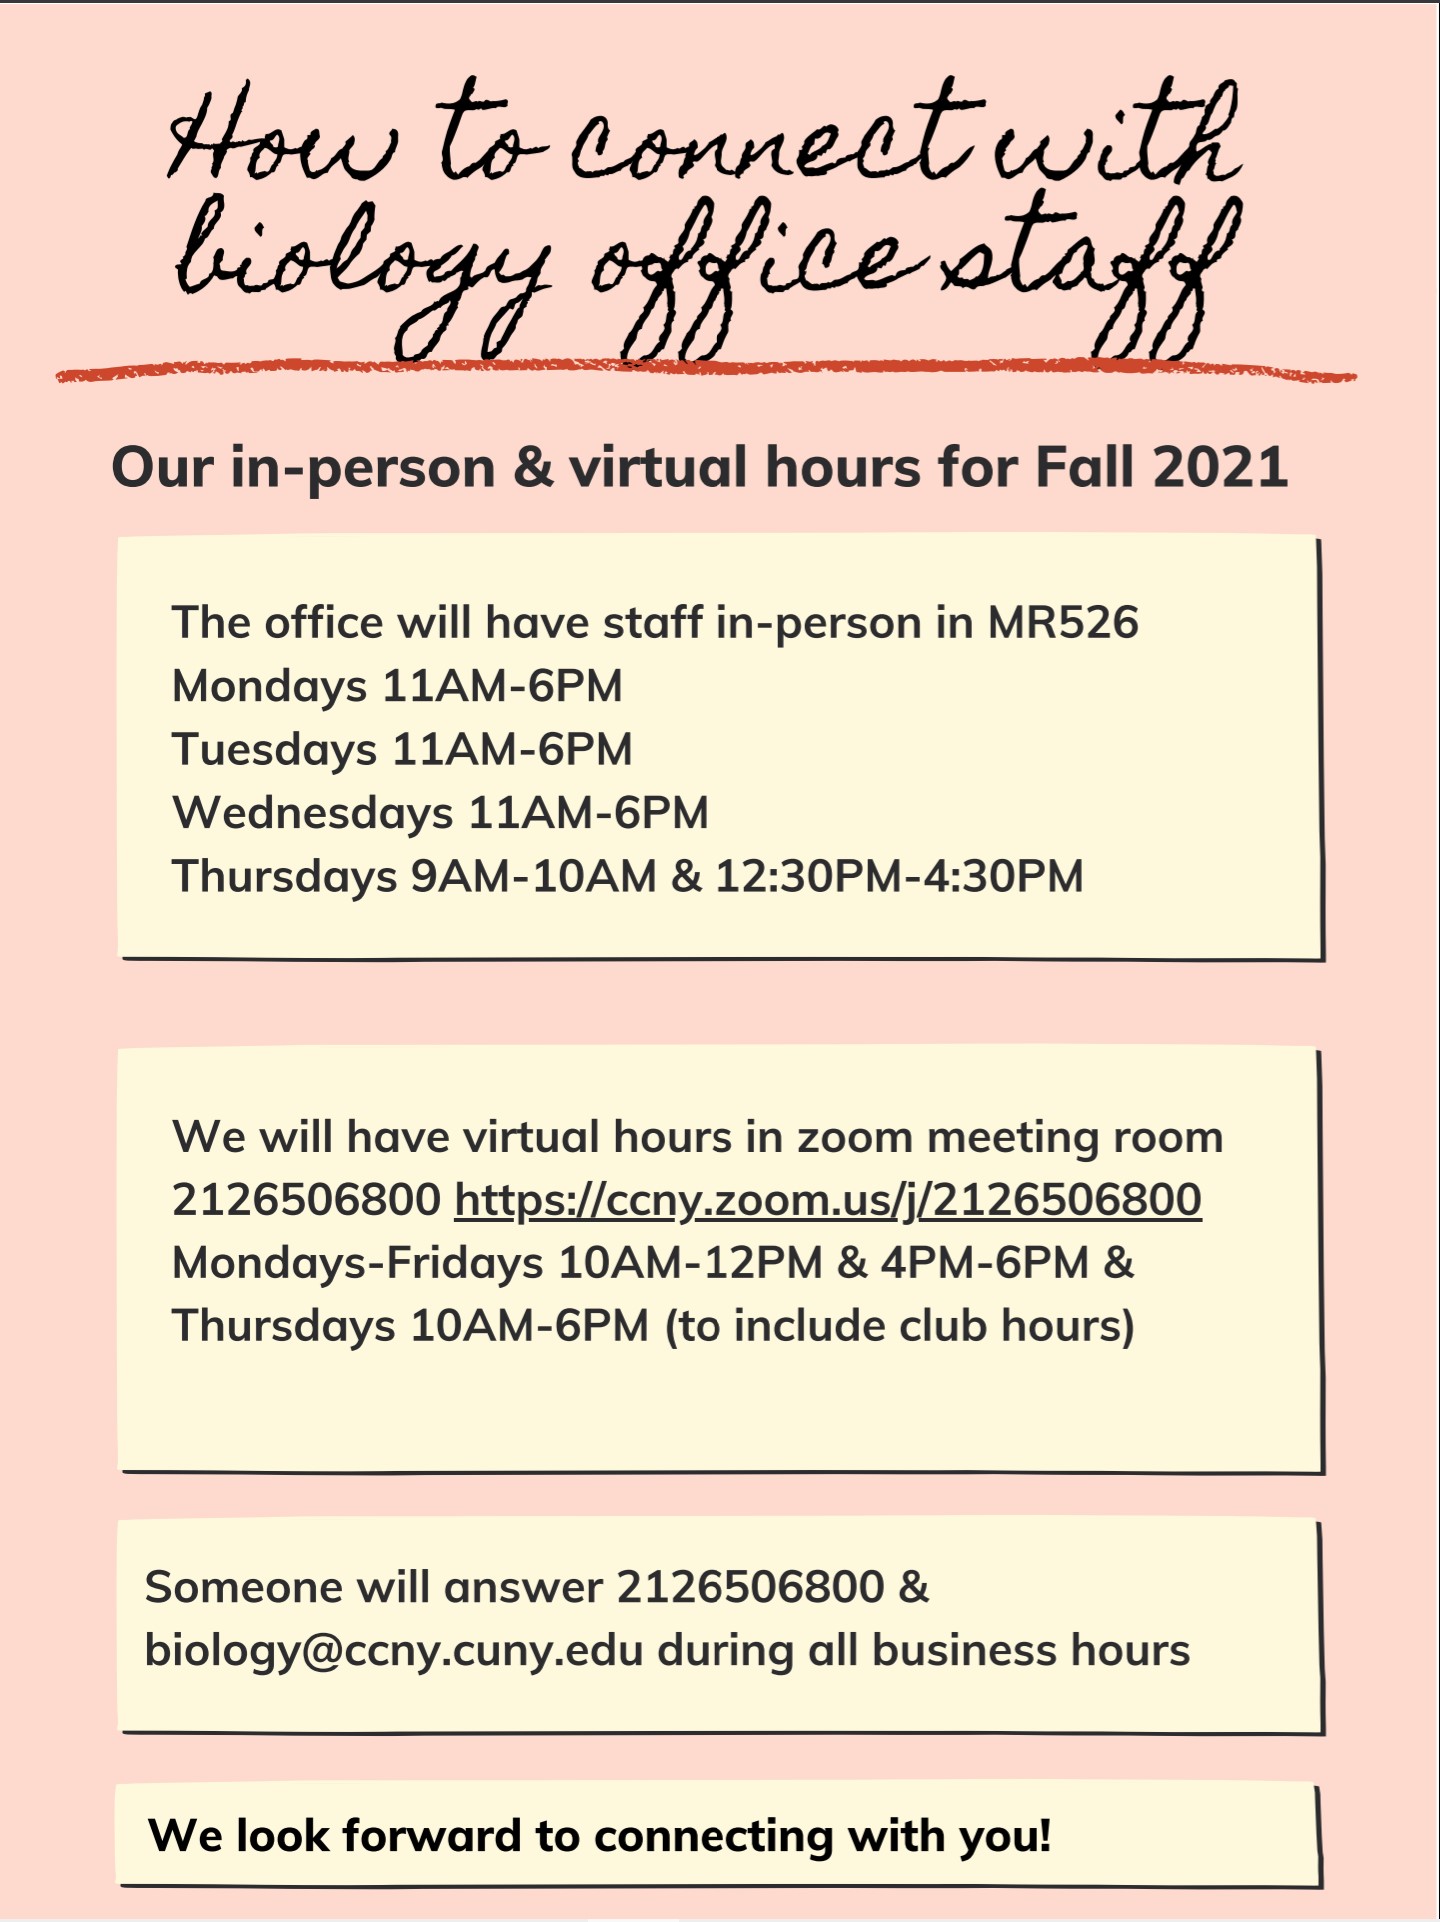 Virtual Hours